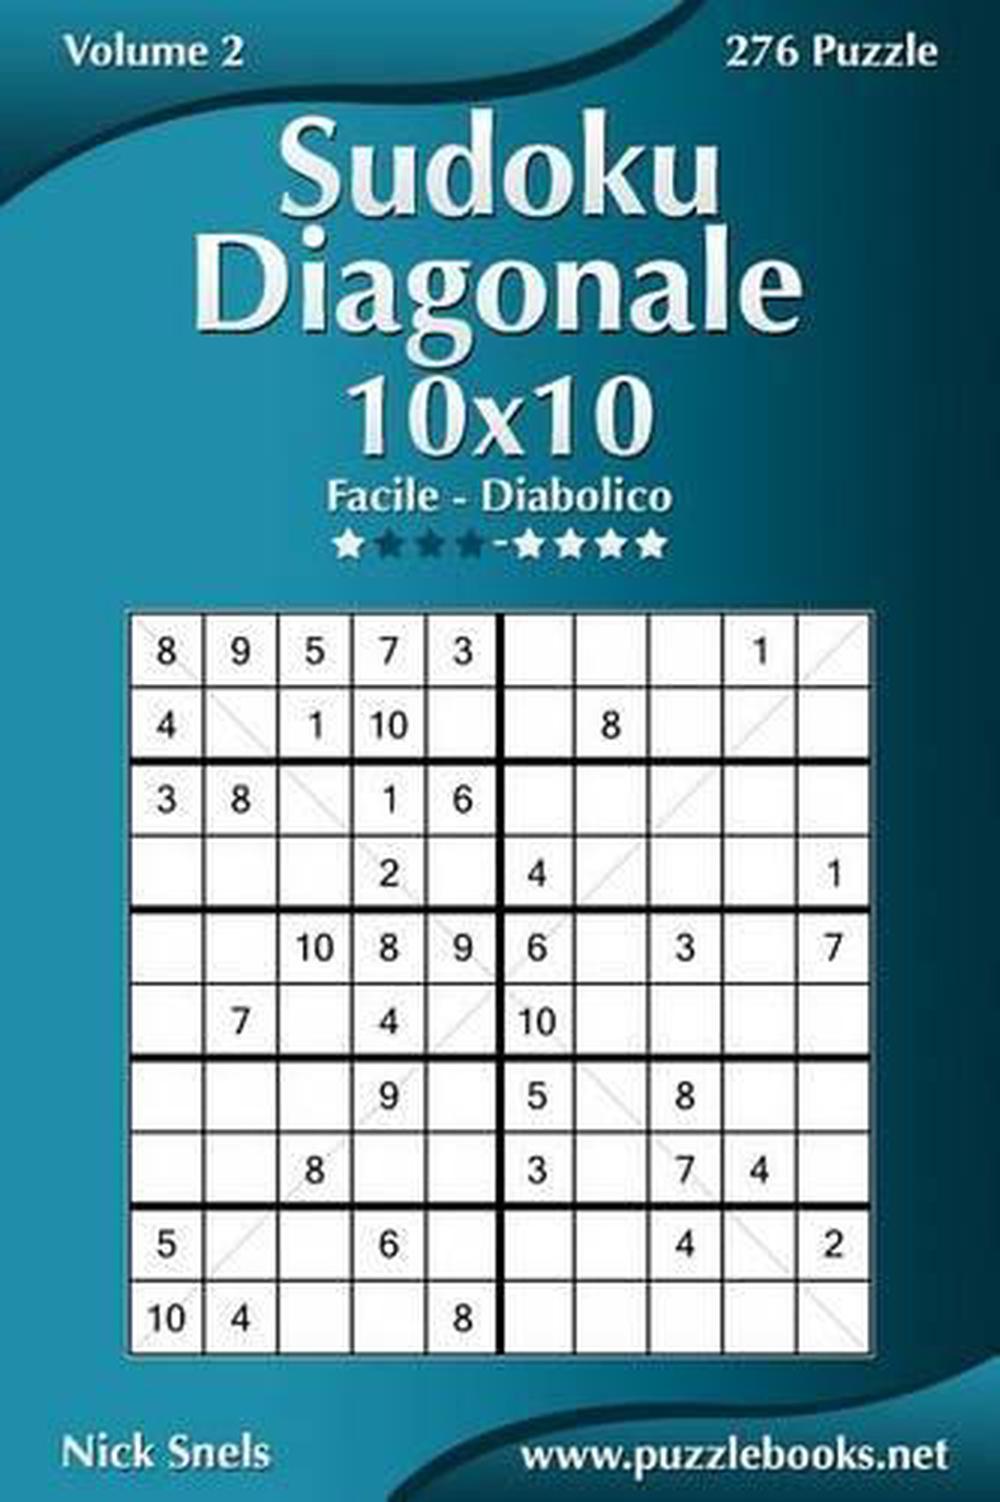 16x16 sudoku with diagonal